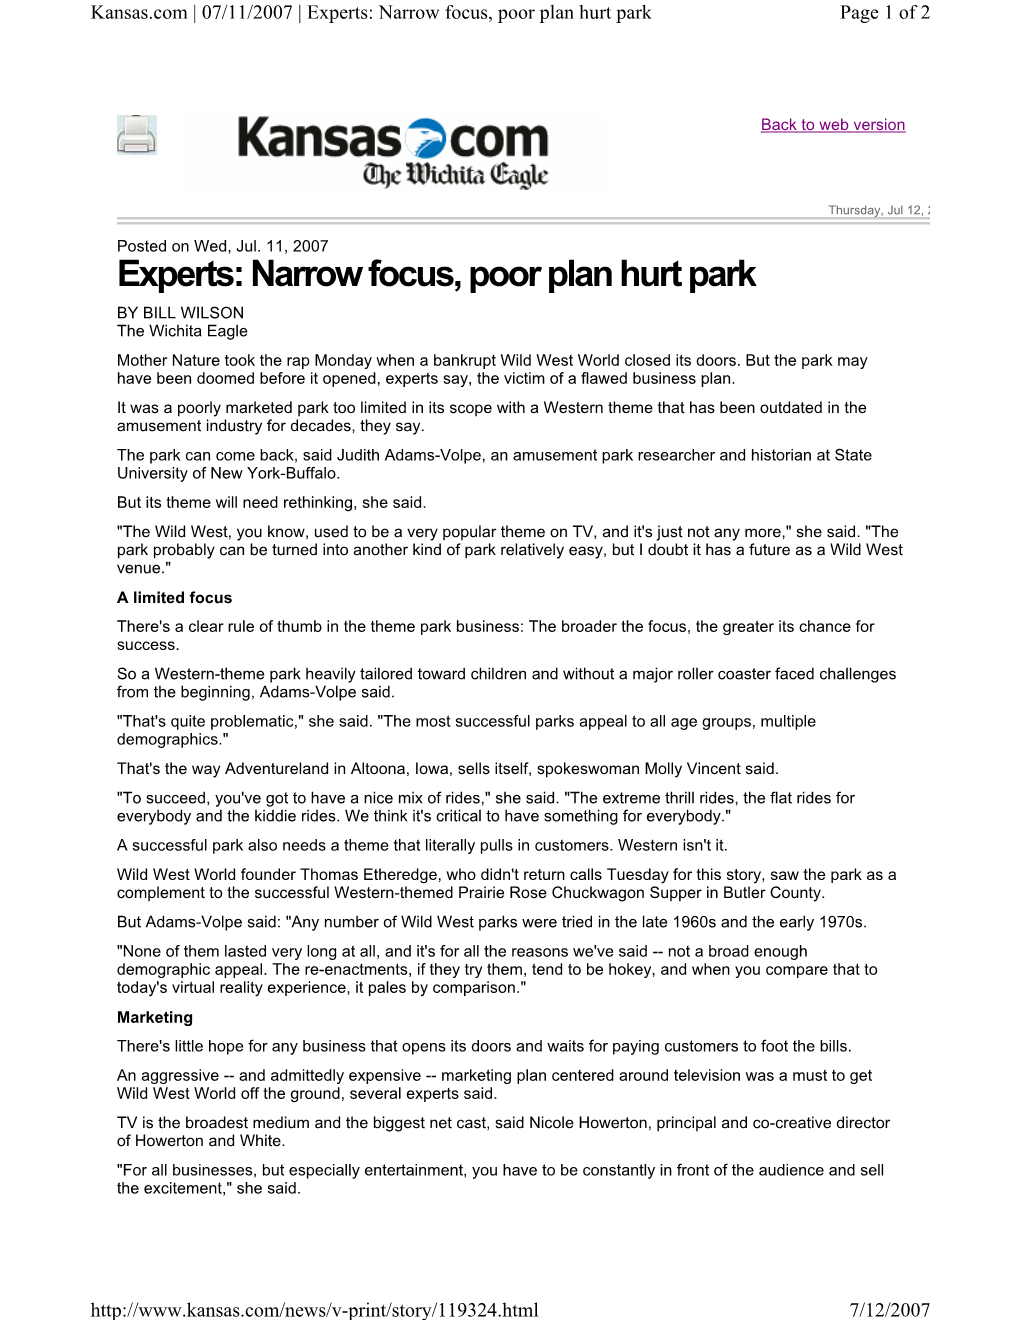 Experts: Narrow Focus, Poor Plan Hurt Park Page 1 of 2